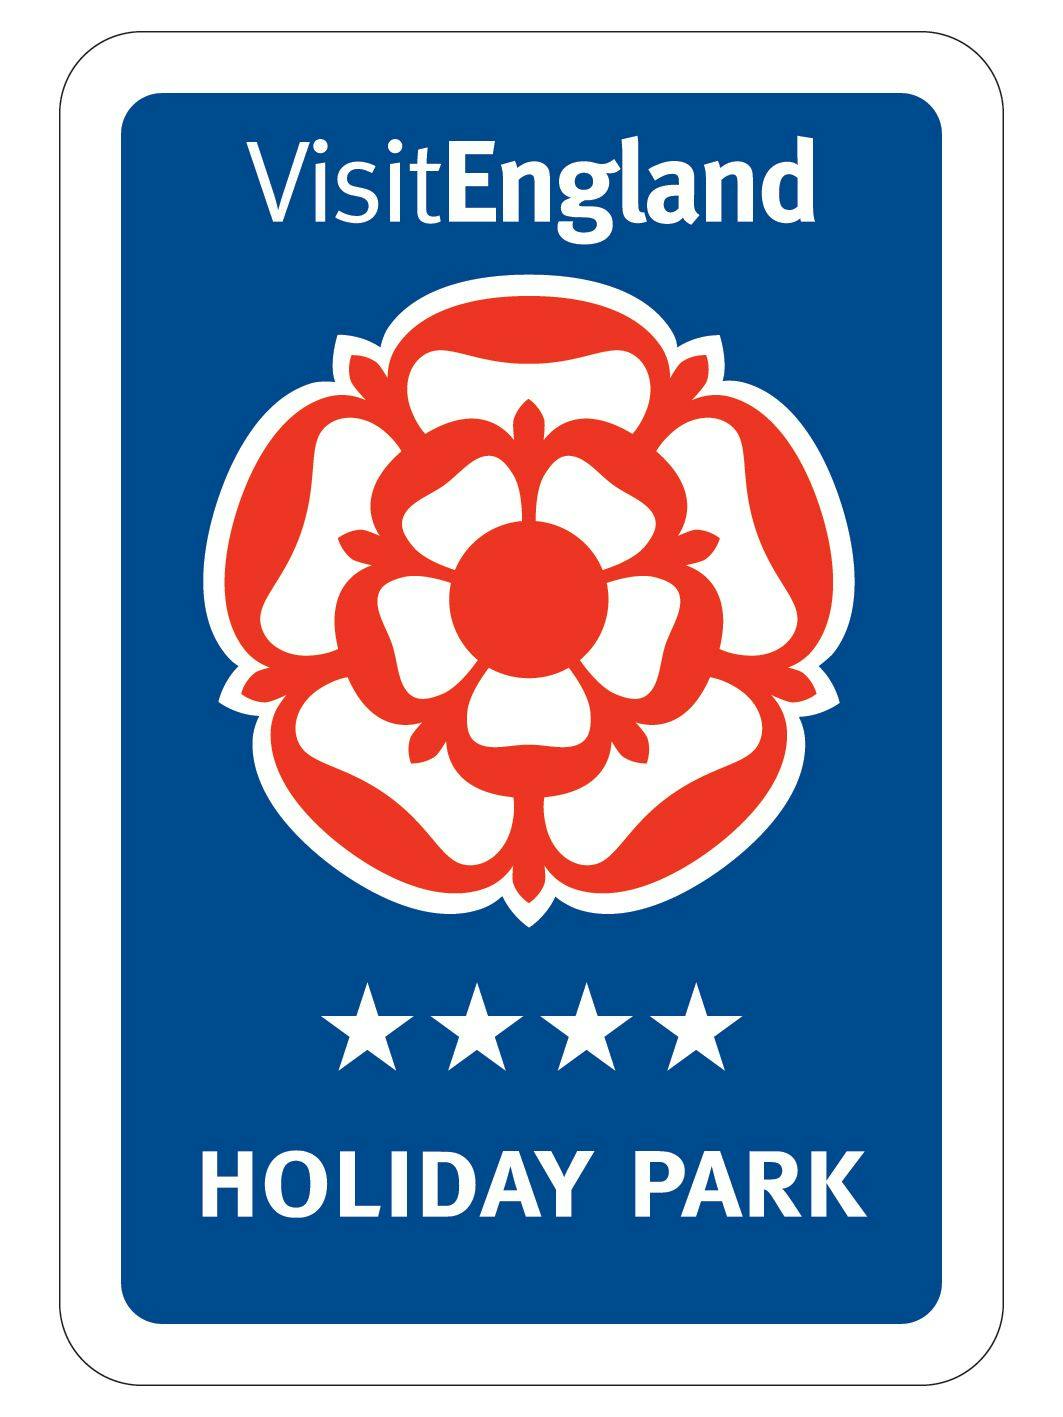 Visit England 4 Star Holiday Parks